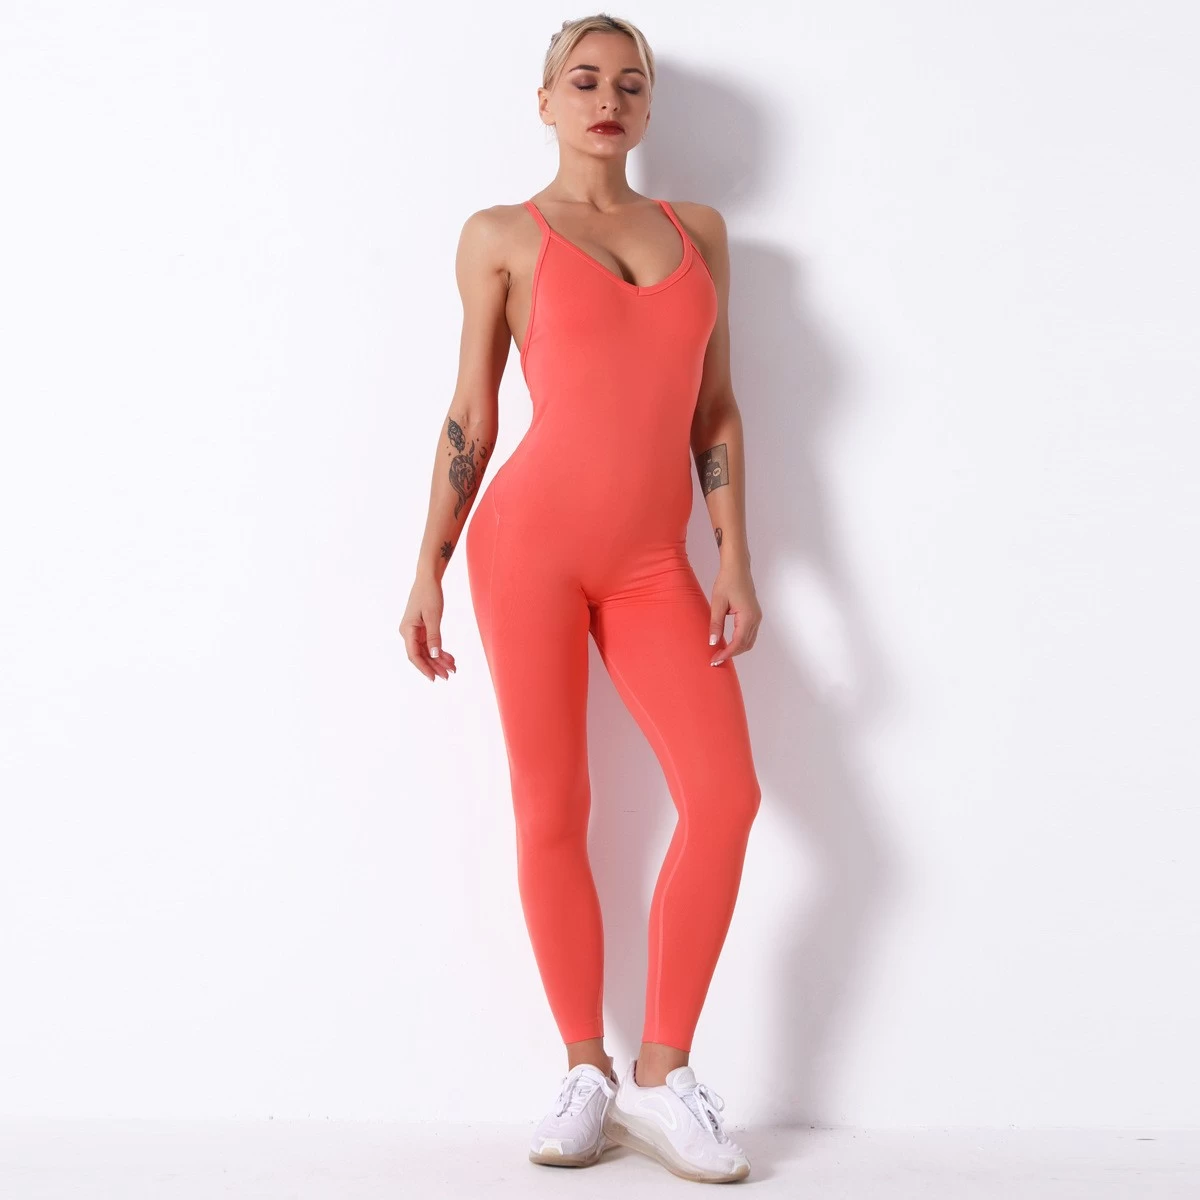 S-SHAPER Seamless Women's Yoga Jumpsuit Backless Sports Romper Playsuit Sleeveless Gym Bodysuit Manufacturer